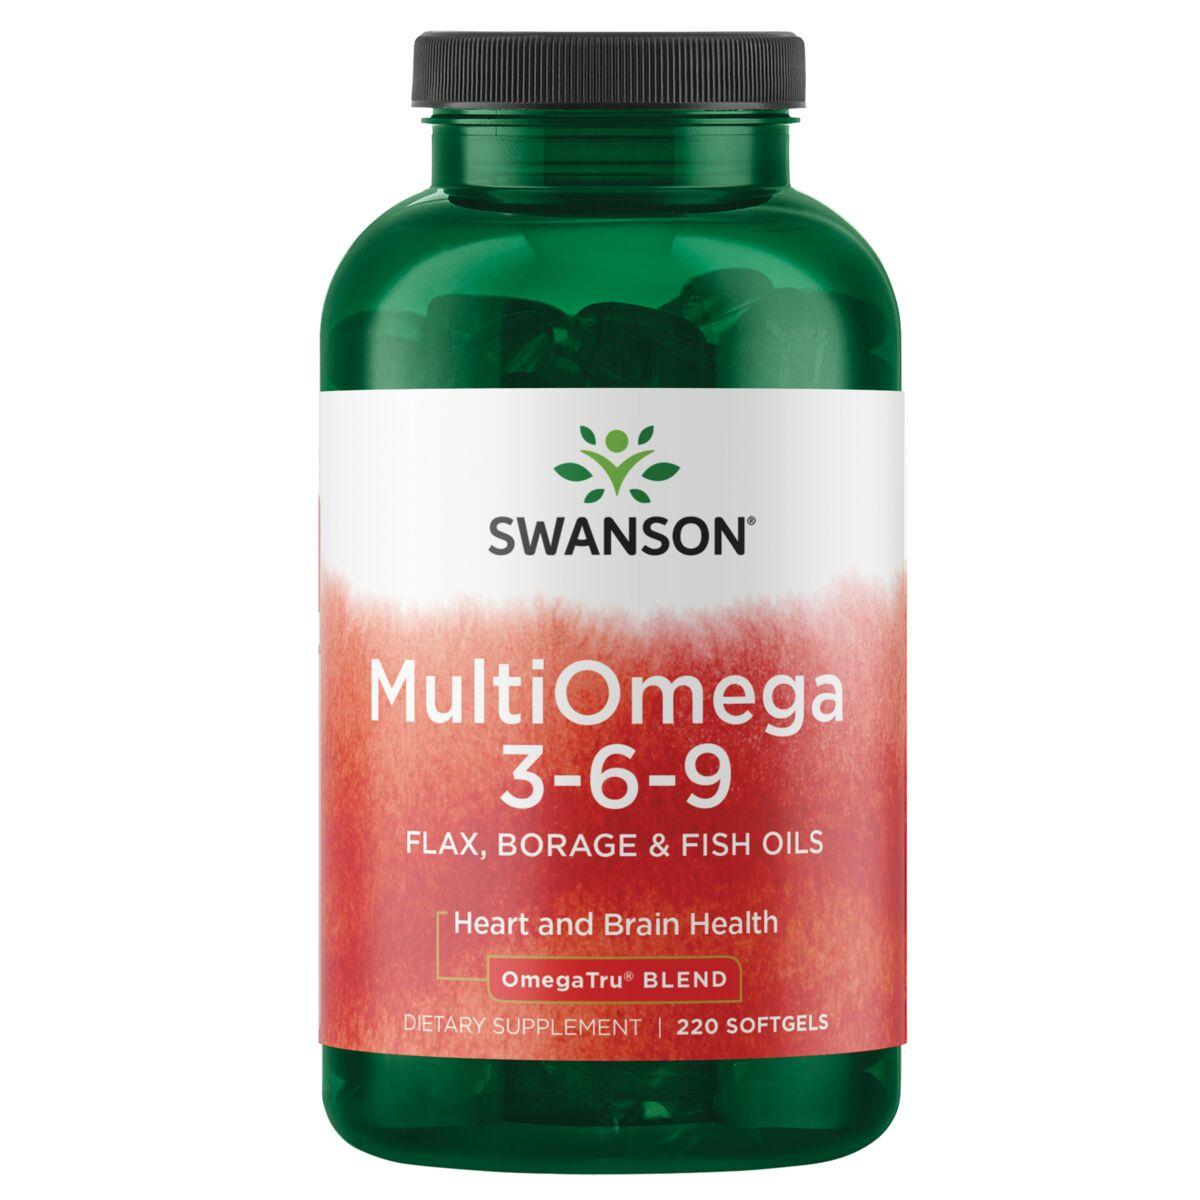 Swanson EFAs Multiomega 3-6-9 Flax, Borage & Fish Oils - Omegatru Blend Supplement Vitamin | 220 Soft Gels